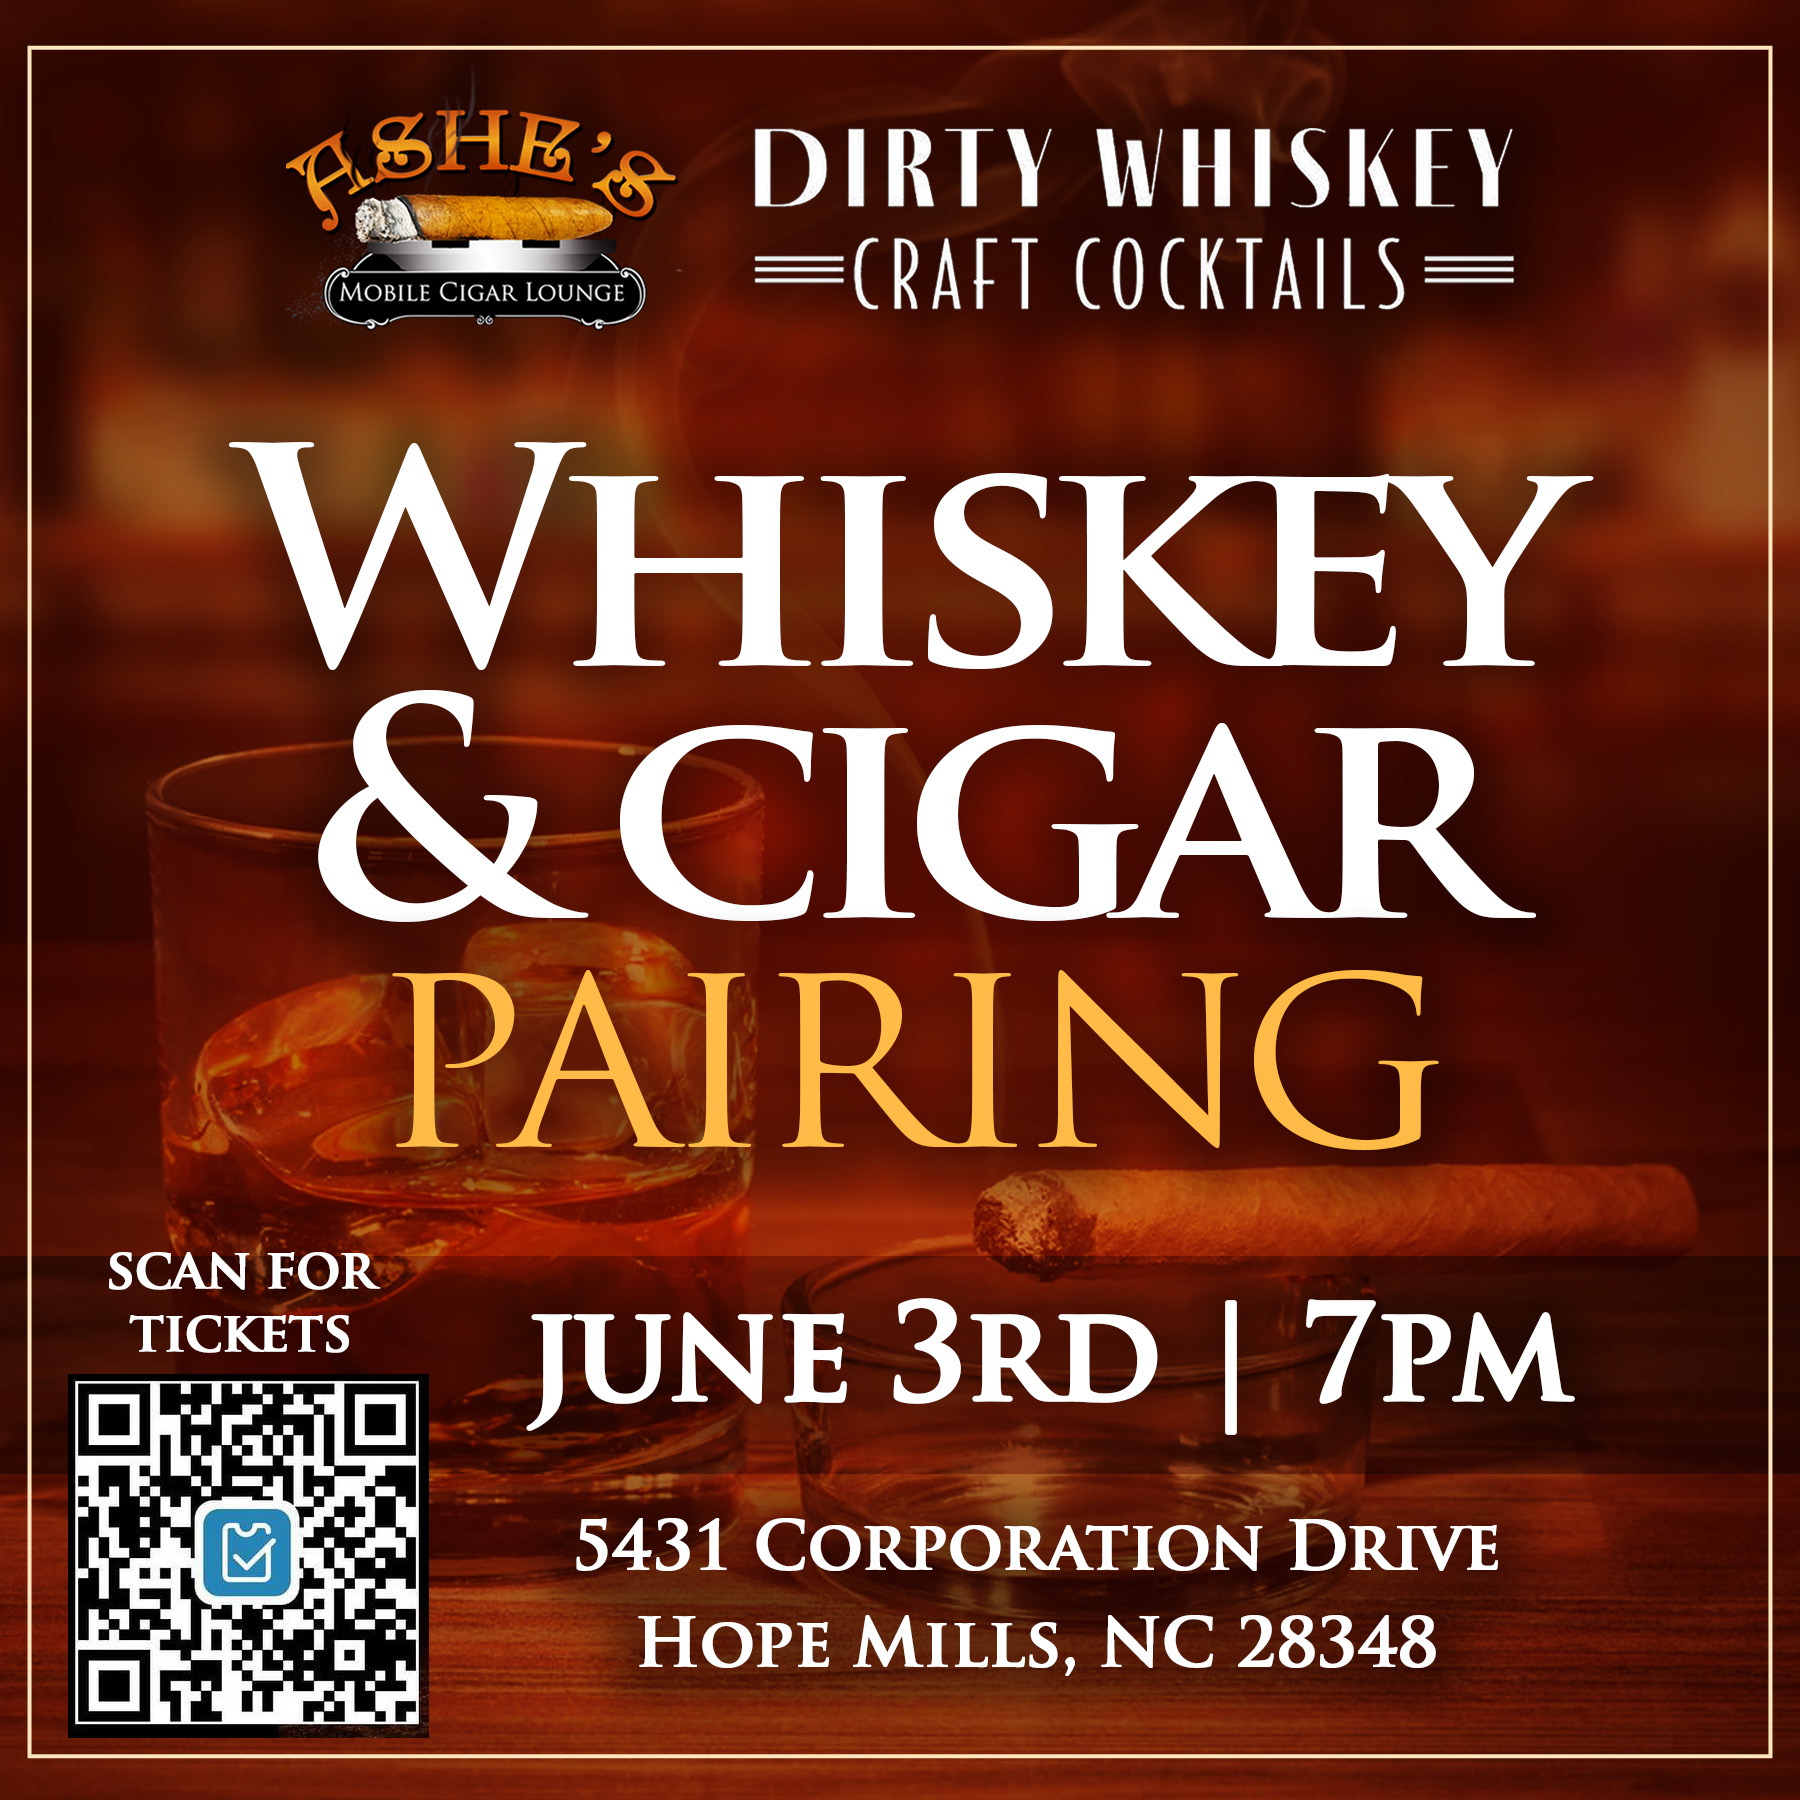 Whiskey & Cigar Pairing - Ashe's Mobile Cigar Lounge